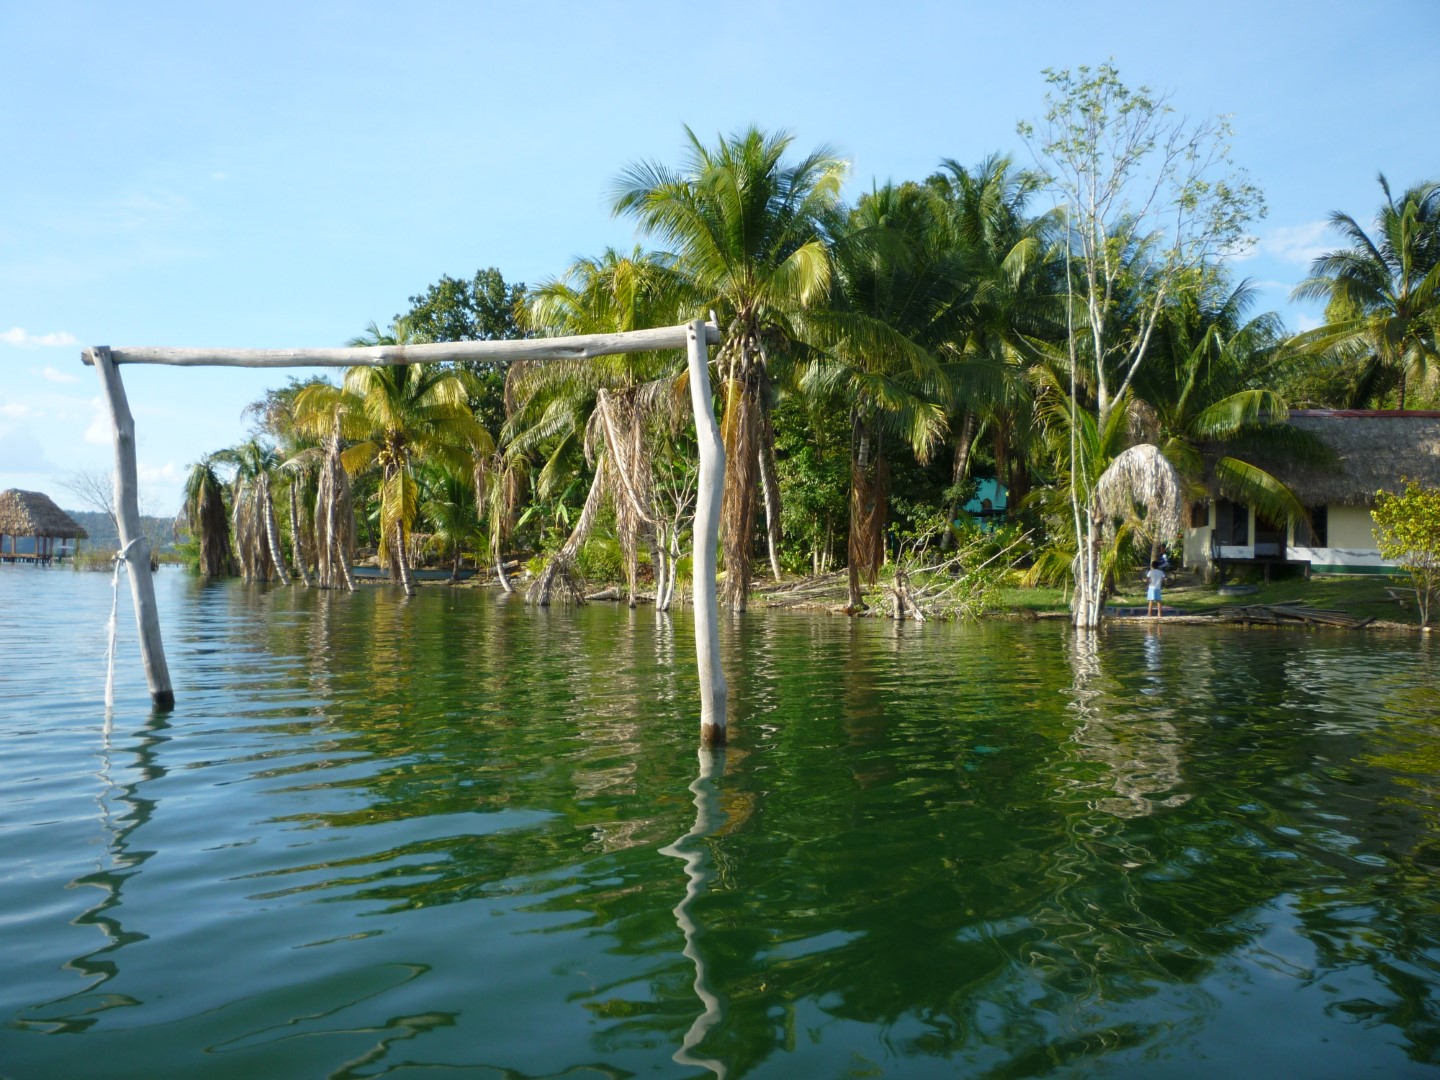 Goalposts underwater in Lake Peten, Guatemala